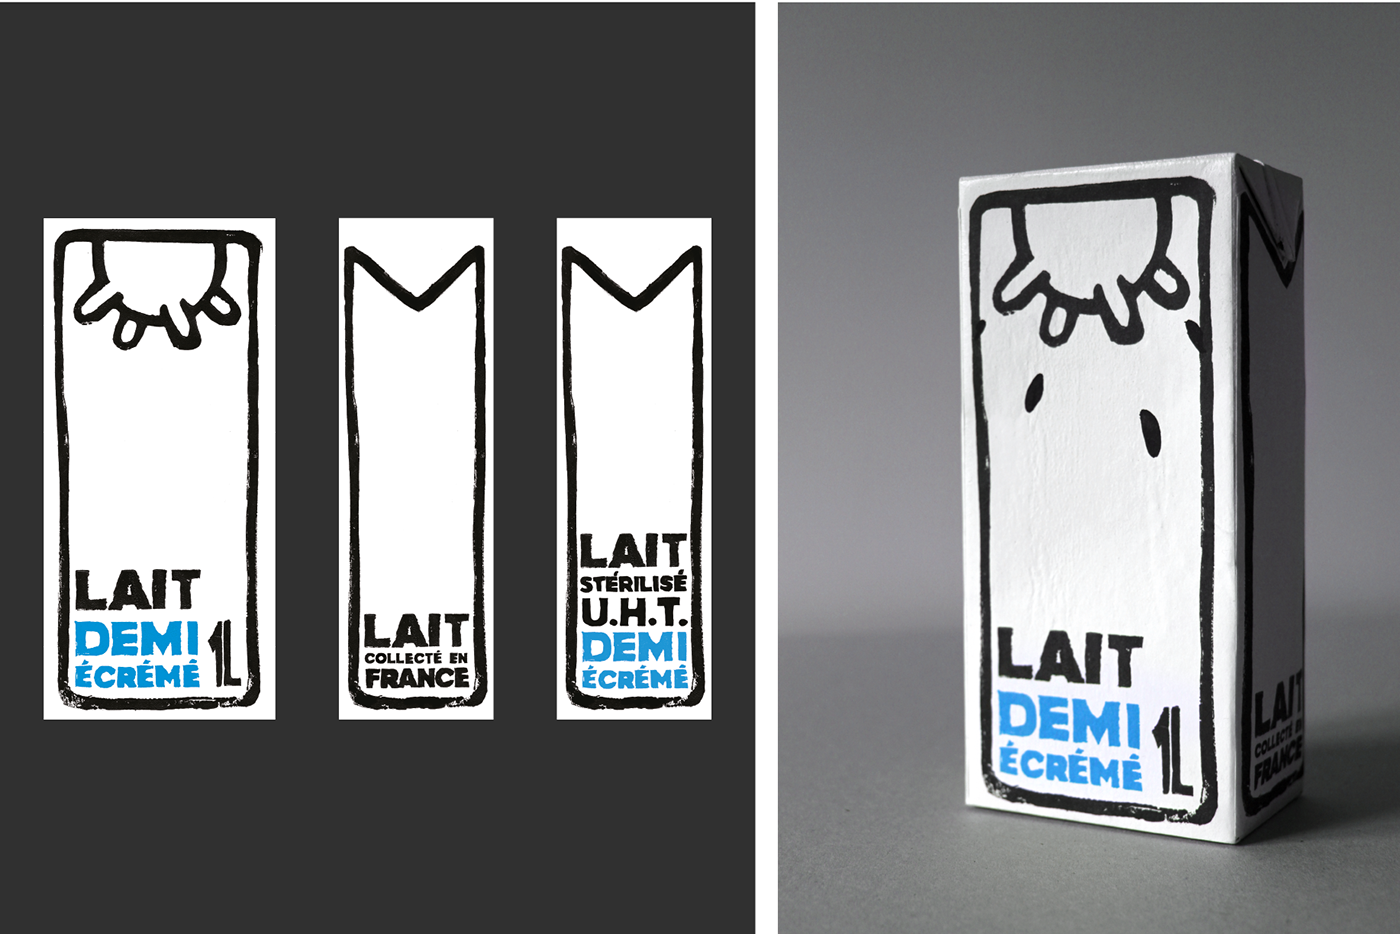 linocut linogravure lait milk print handmade mai 68 protests